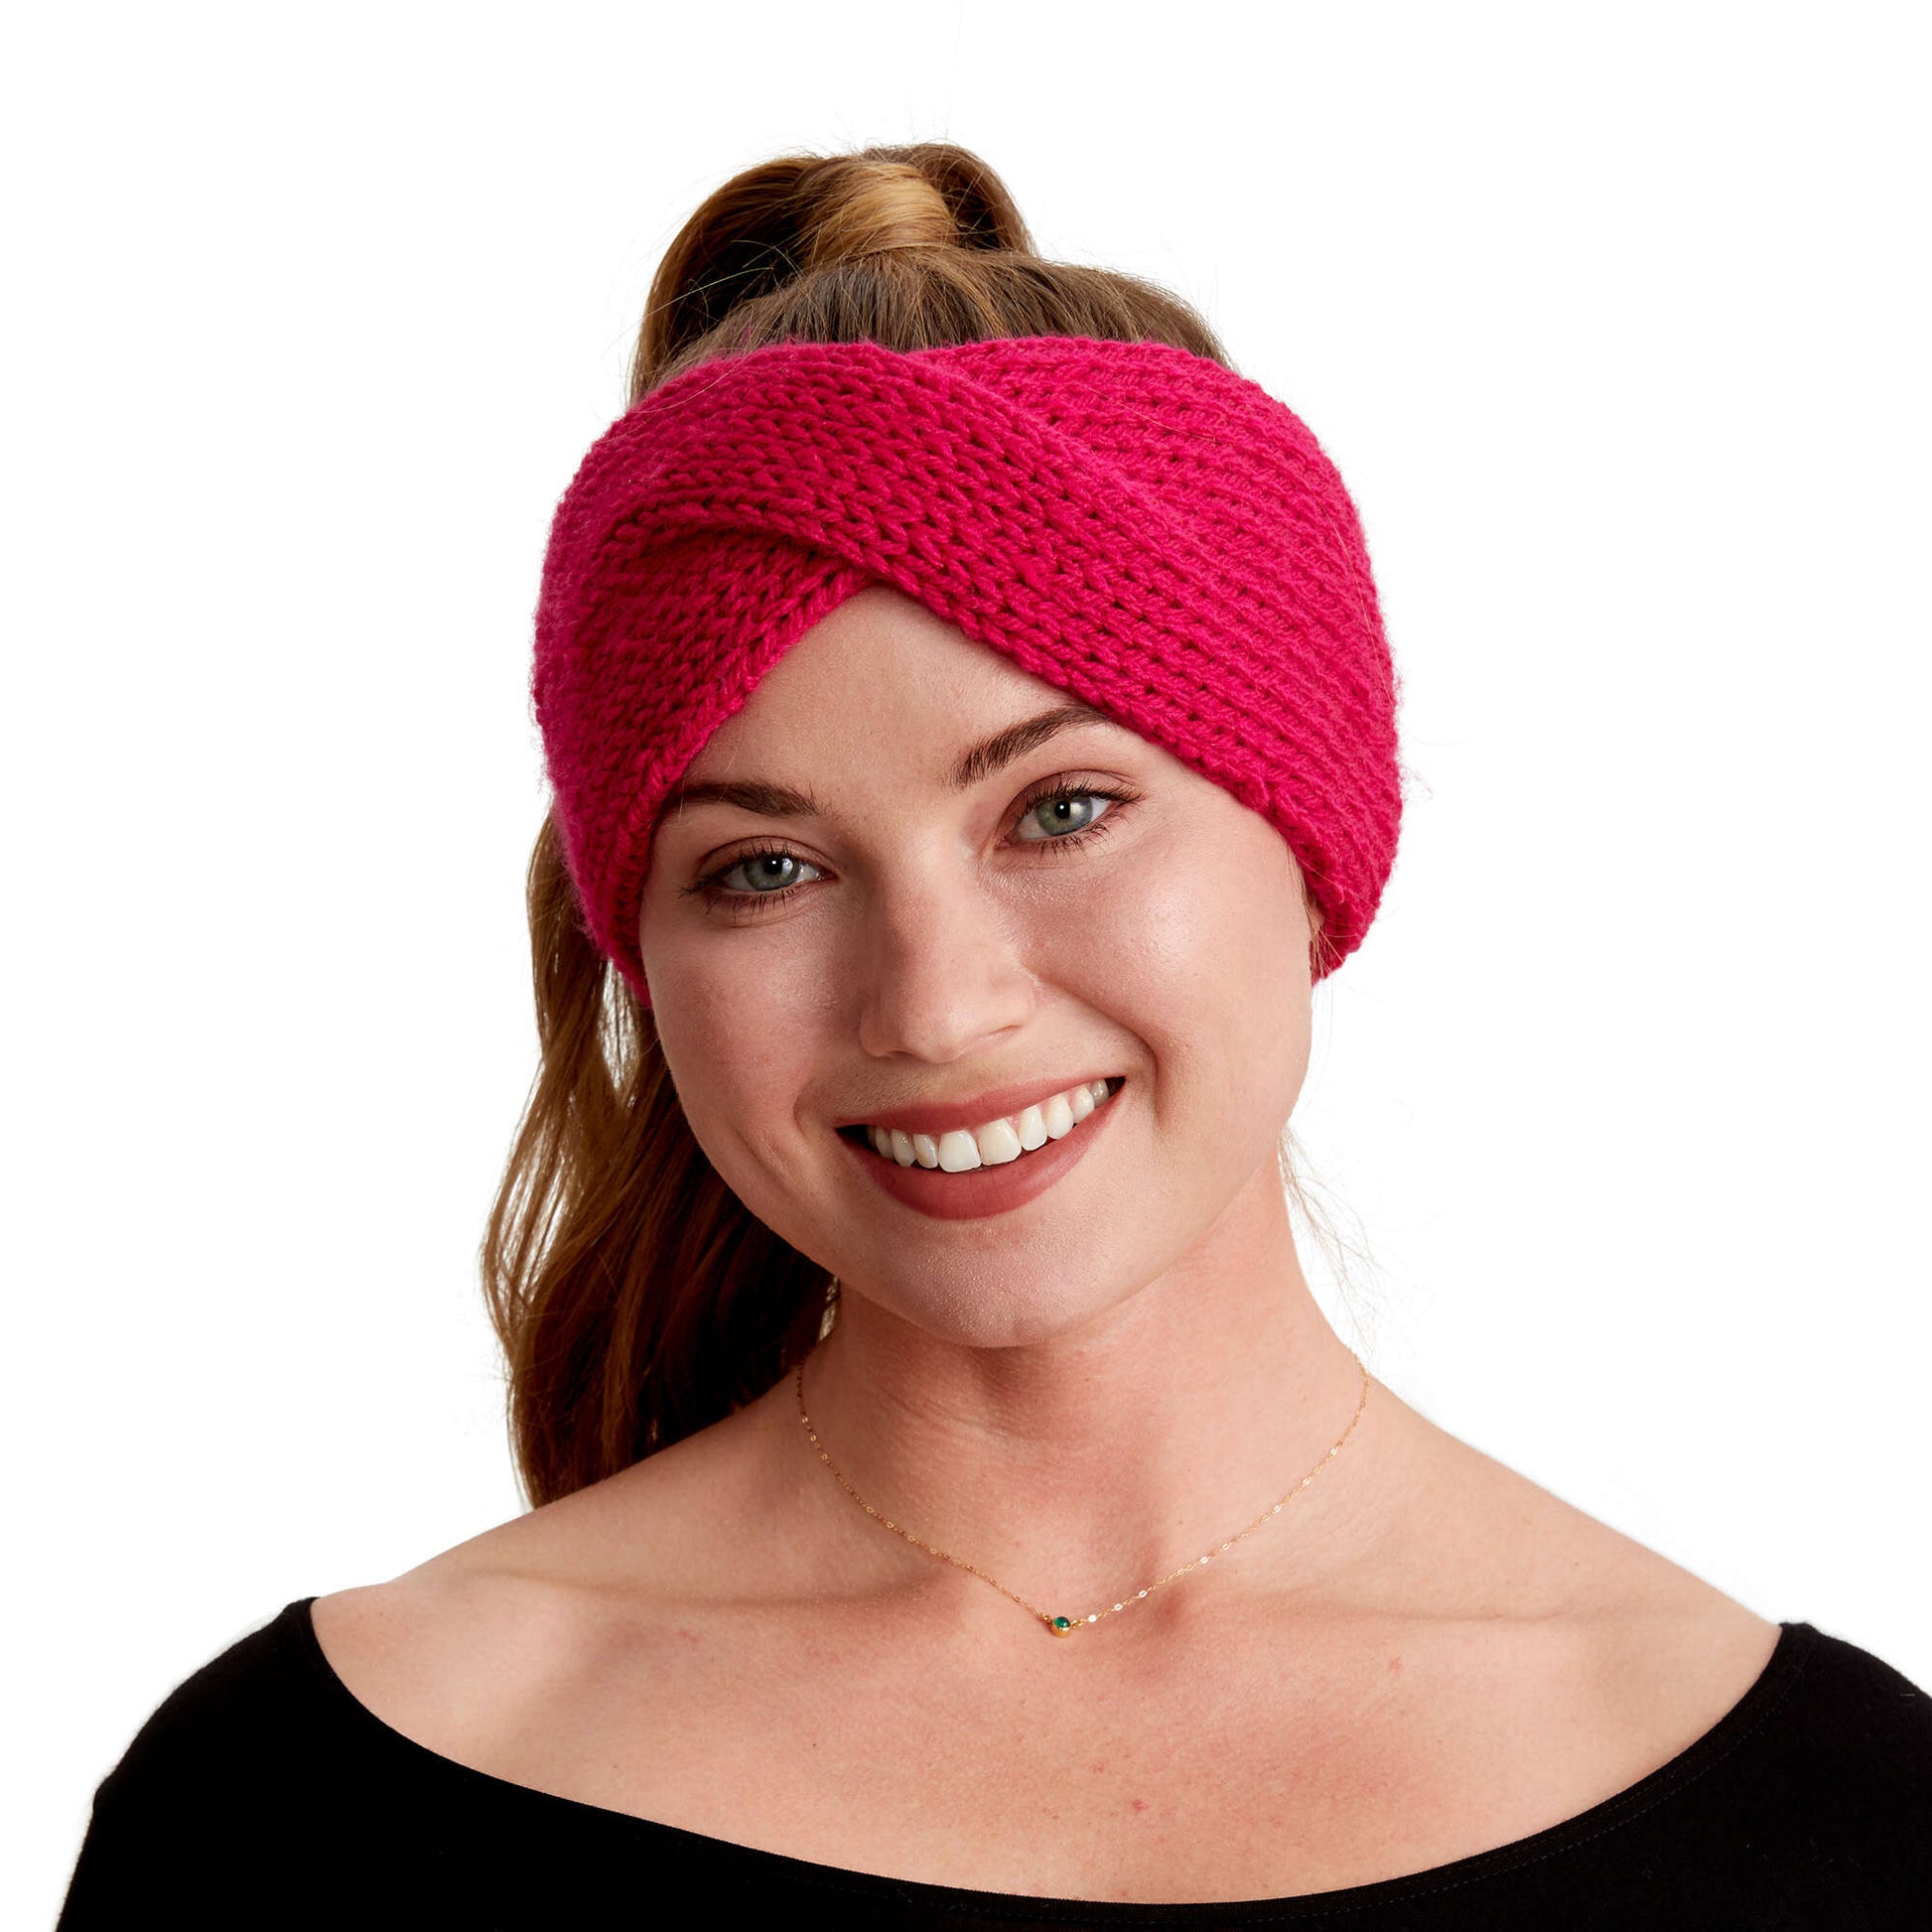 Red Heart Squishy Knit Headband Pattern | Yarnspirations